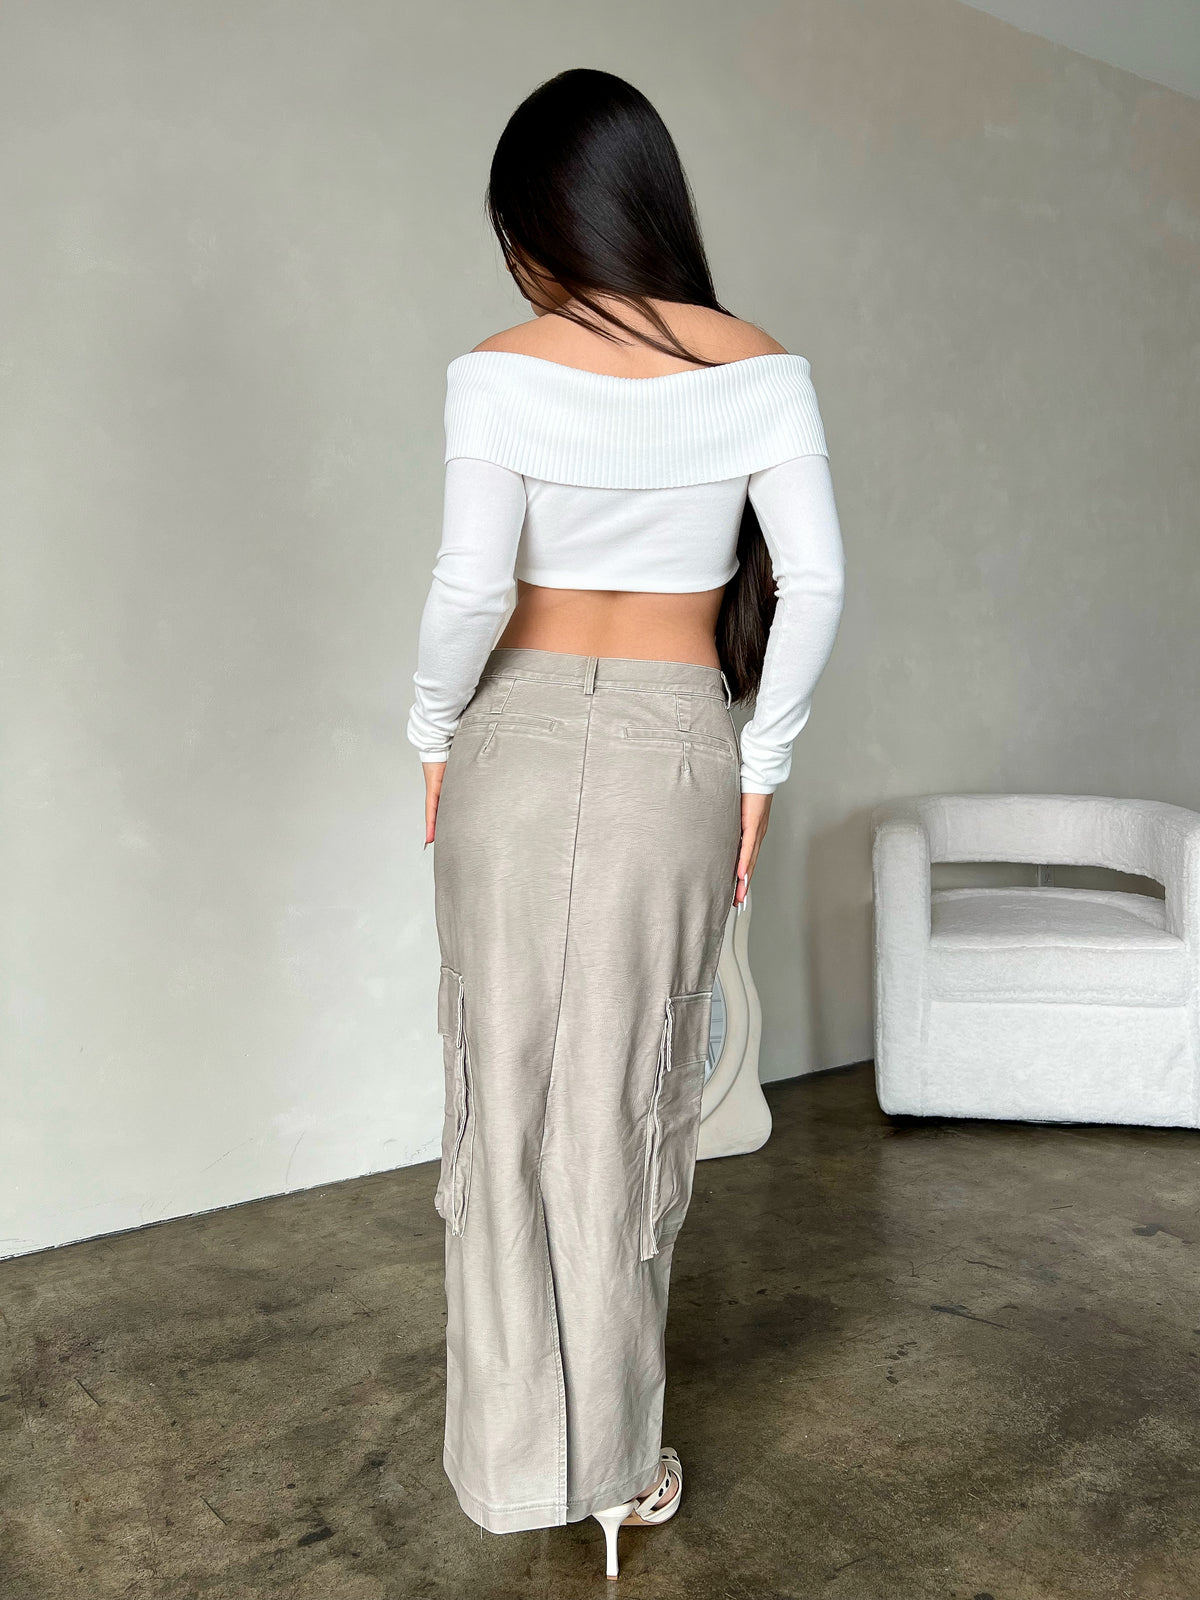 Cori Leather Skirt (Taupe)